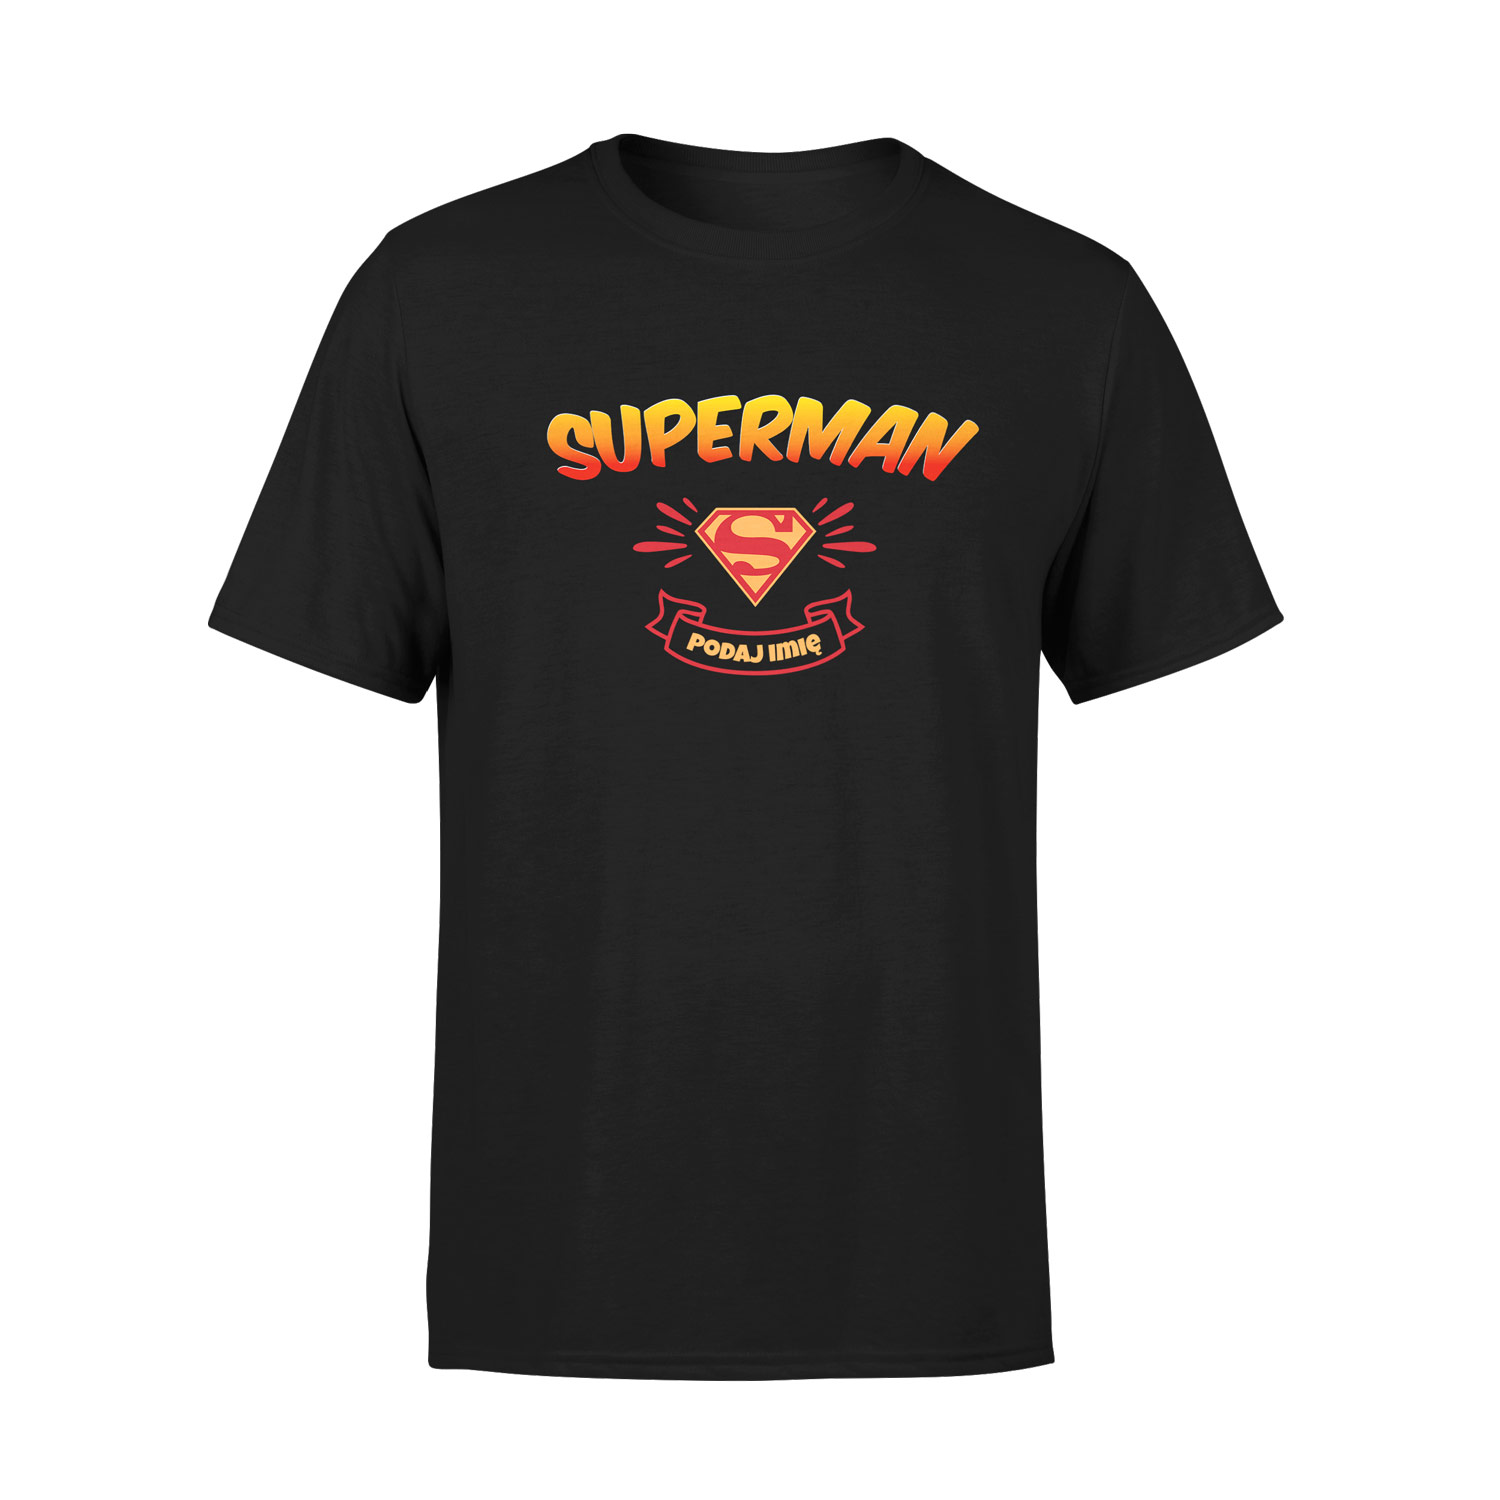 Koszulka dla chłopaka SUPERMAN 1